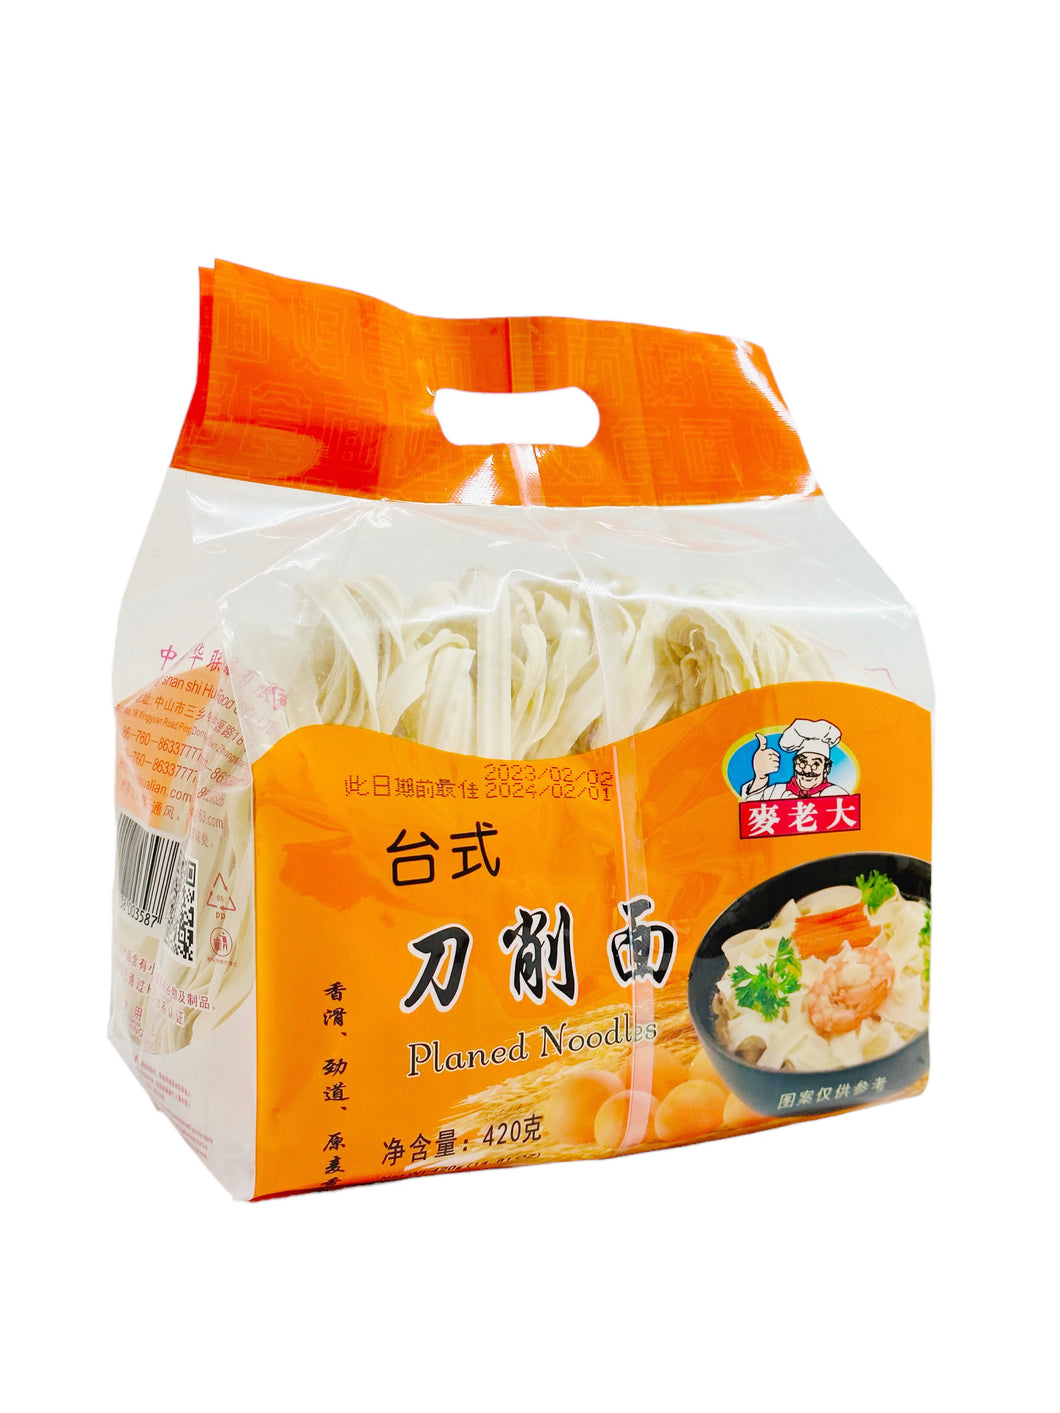 MLD Sliced Noodles 420g 麦老大刀削面